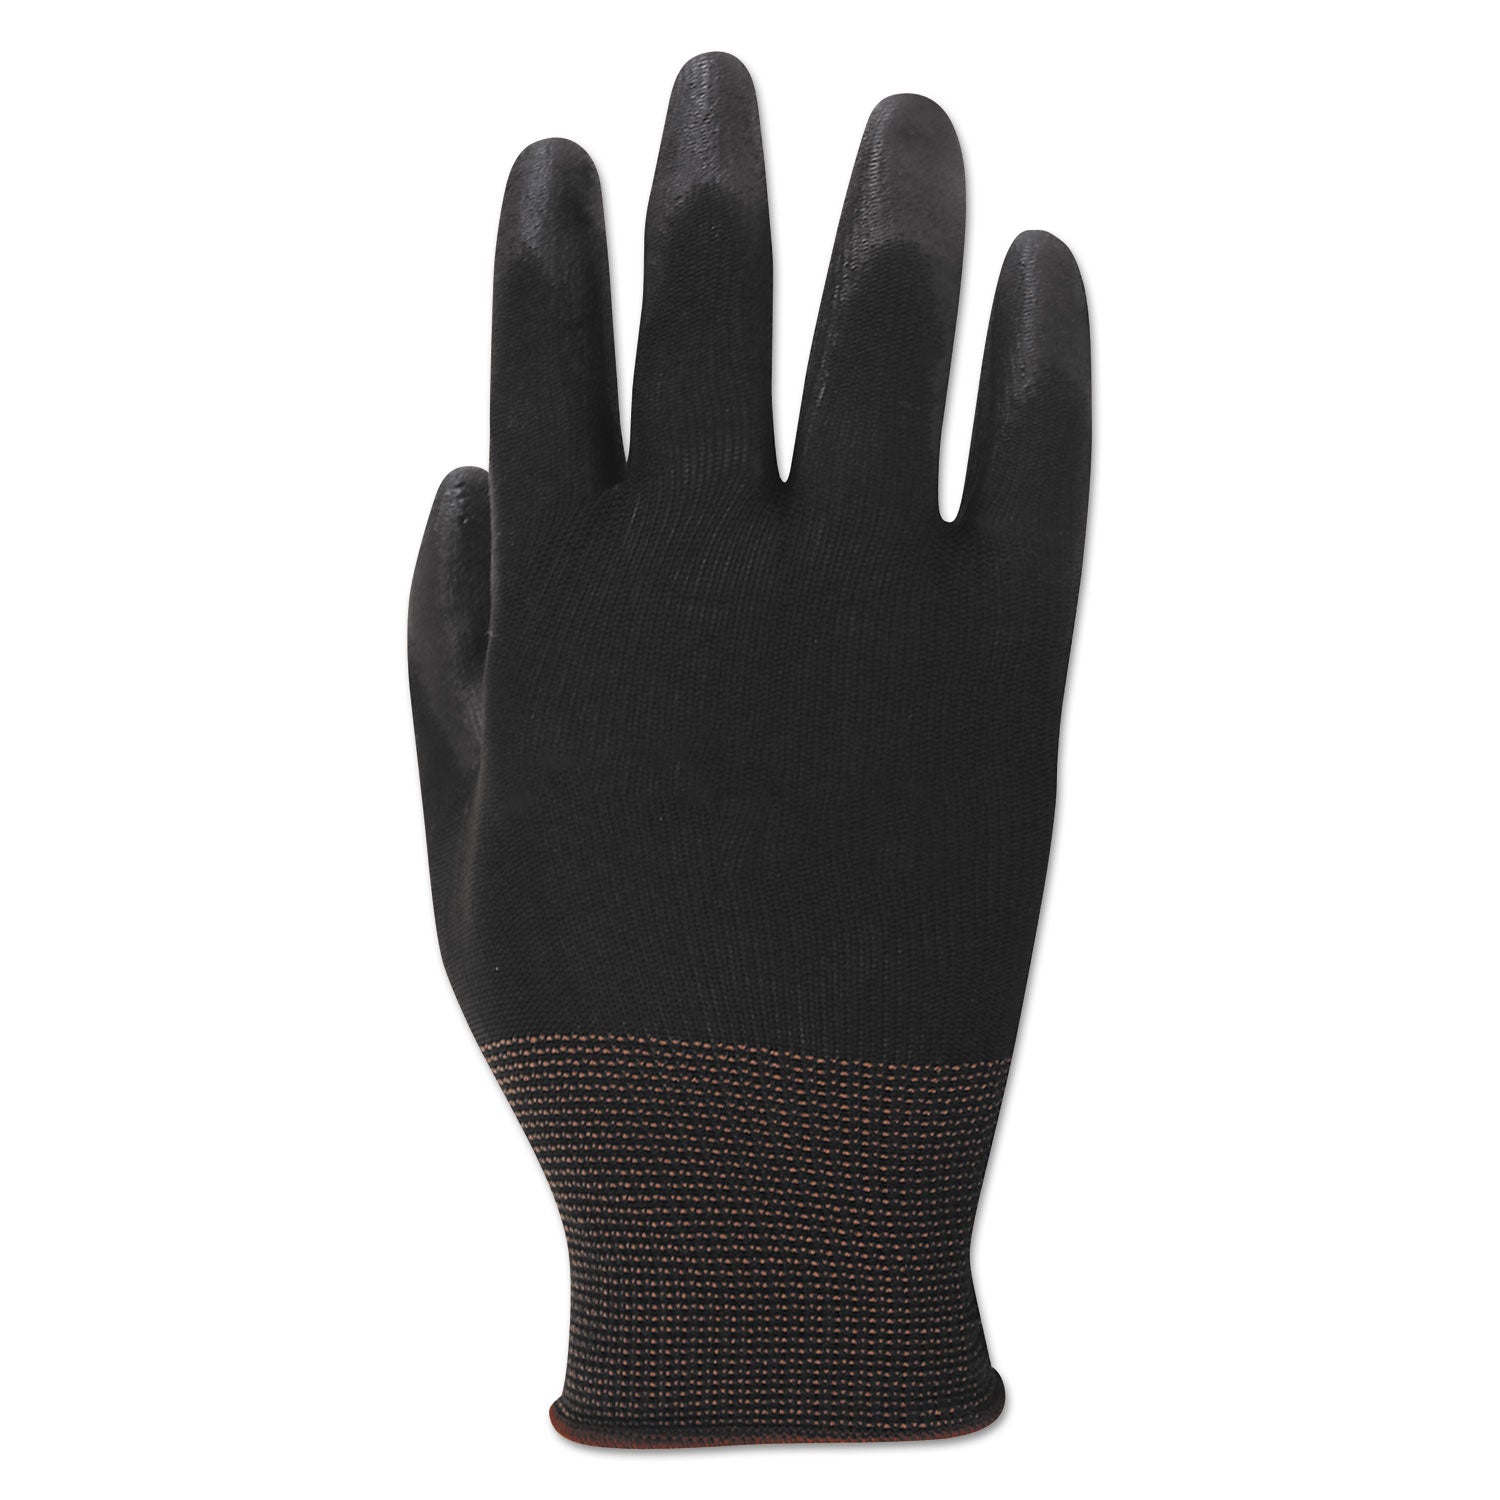 palm-coated-cut-resistant-hppe-glove-salt-and-pepper-black-size-10-x-large-dozen_bwk0002910 - 2